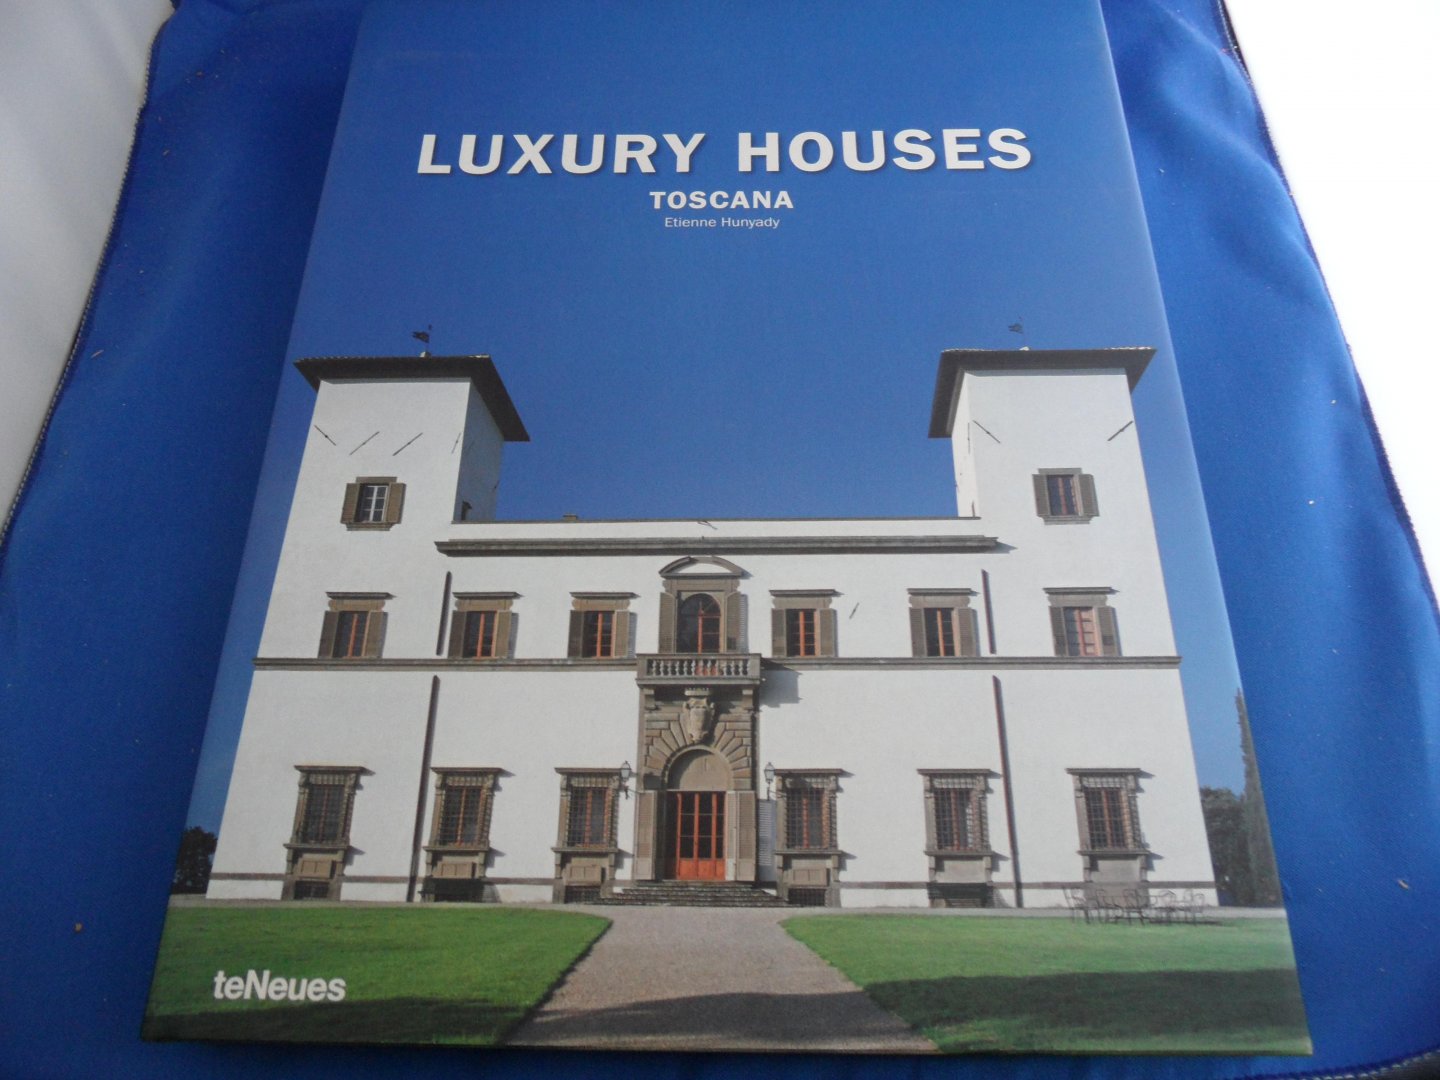 Hunyady, Etiennes - Luxury Houses Toscana